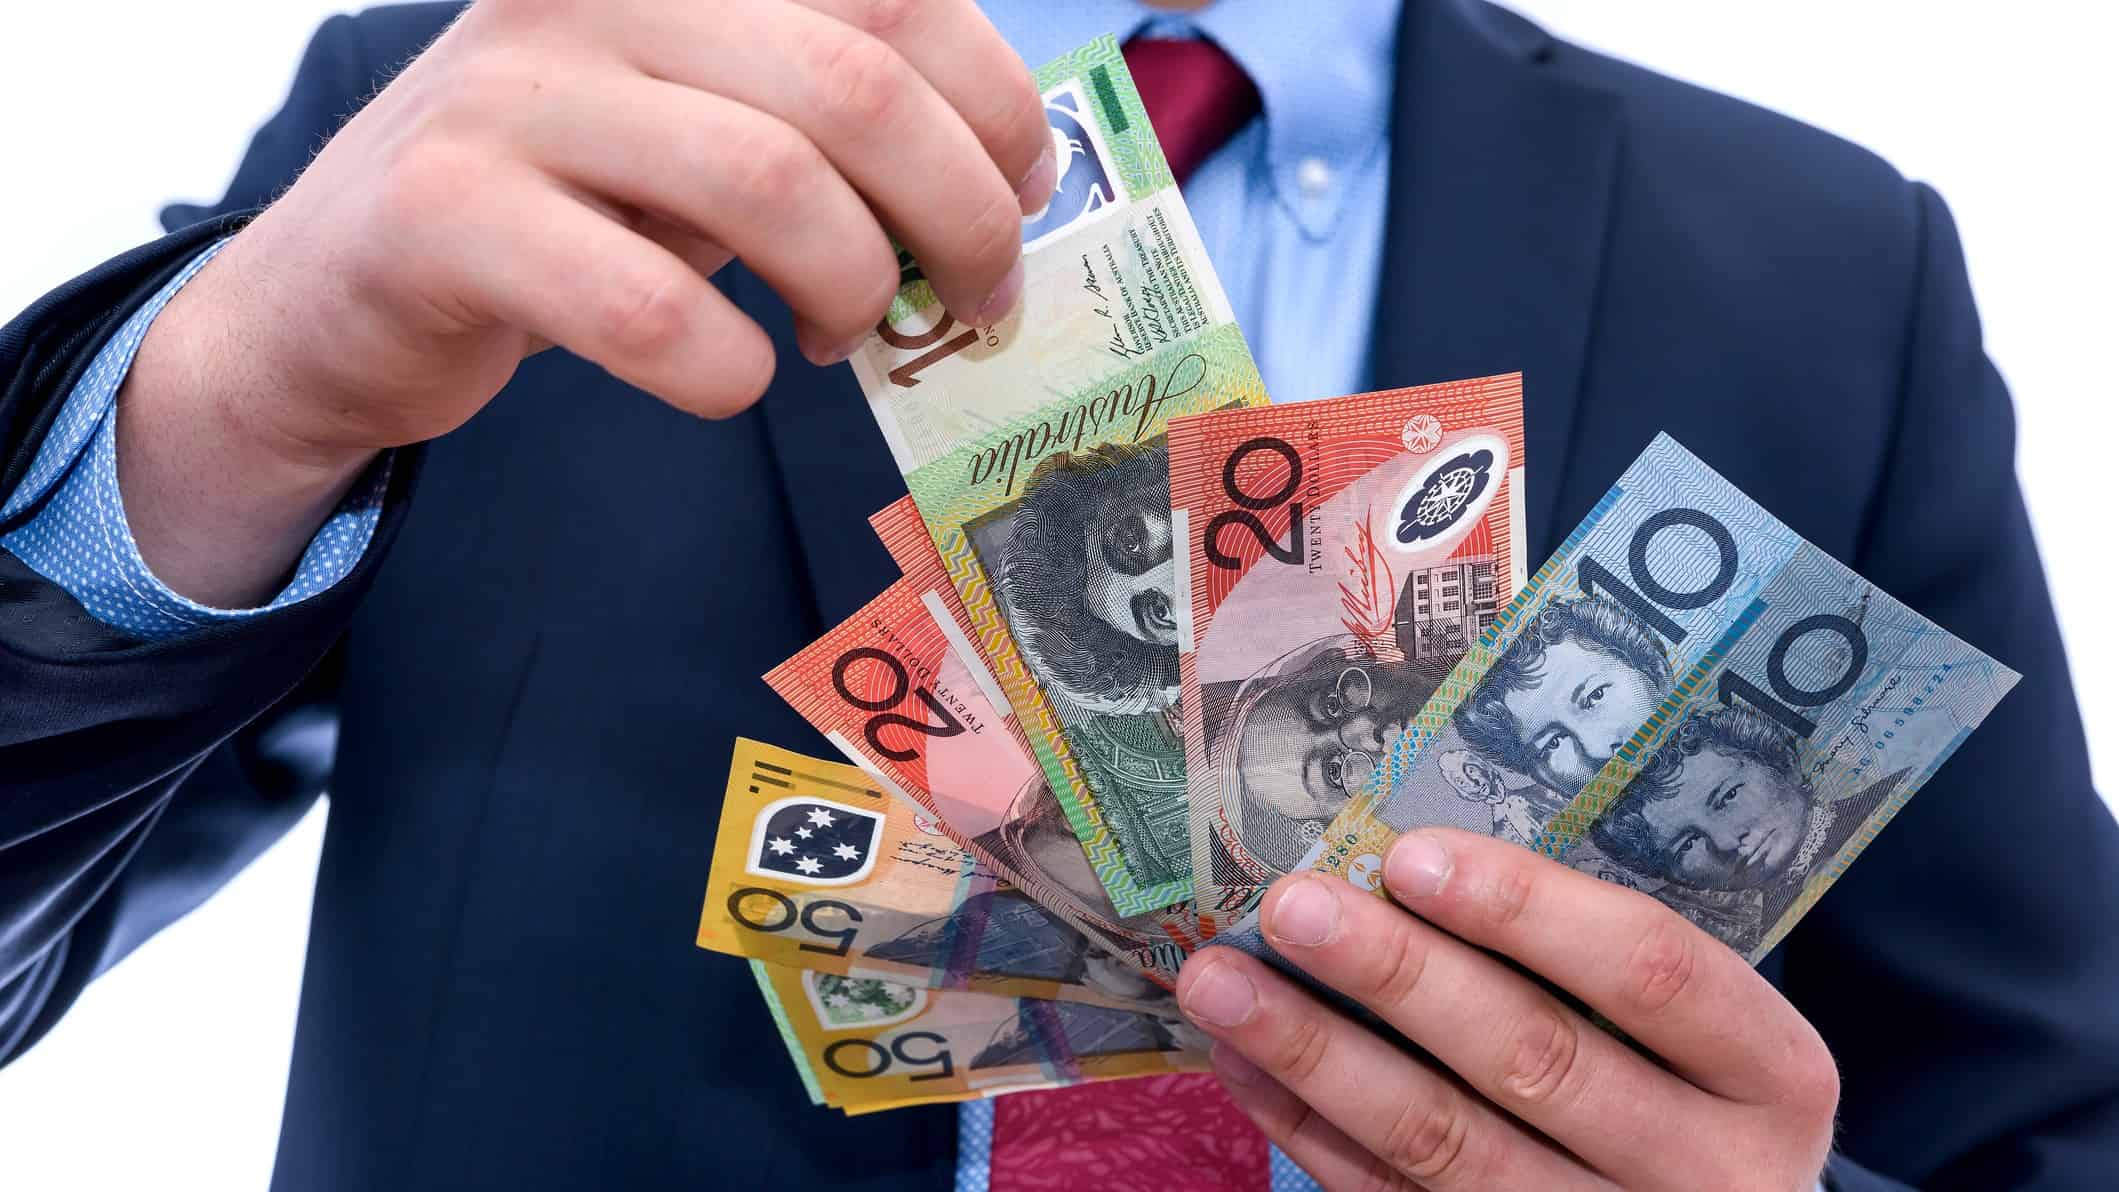 Man with various Australian dollar bills.